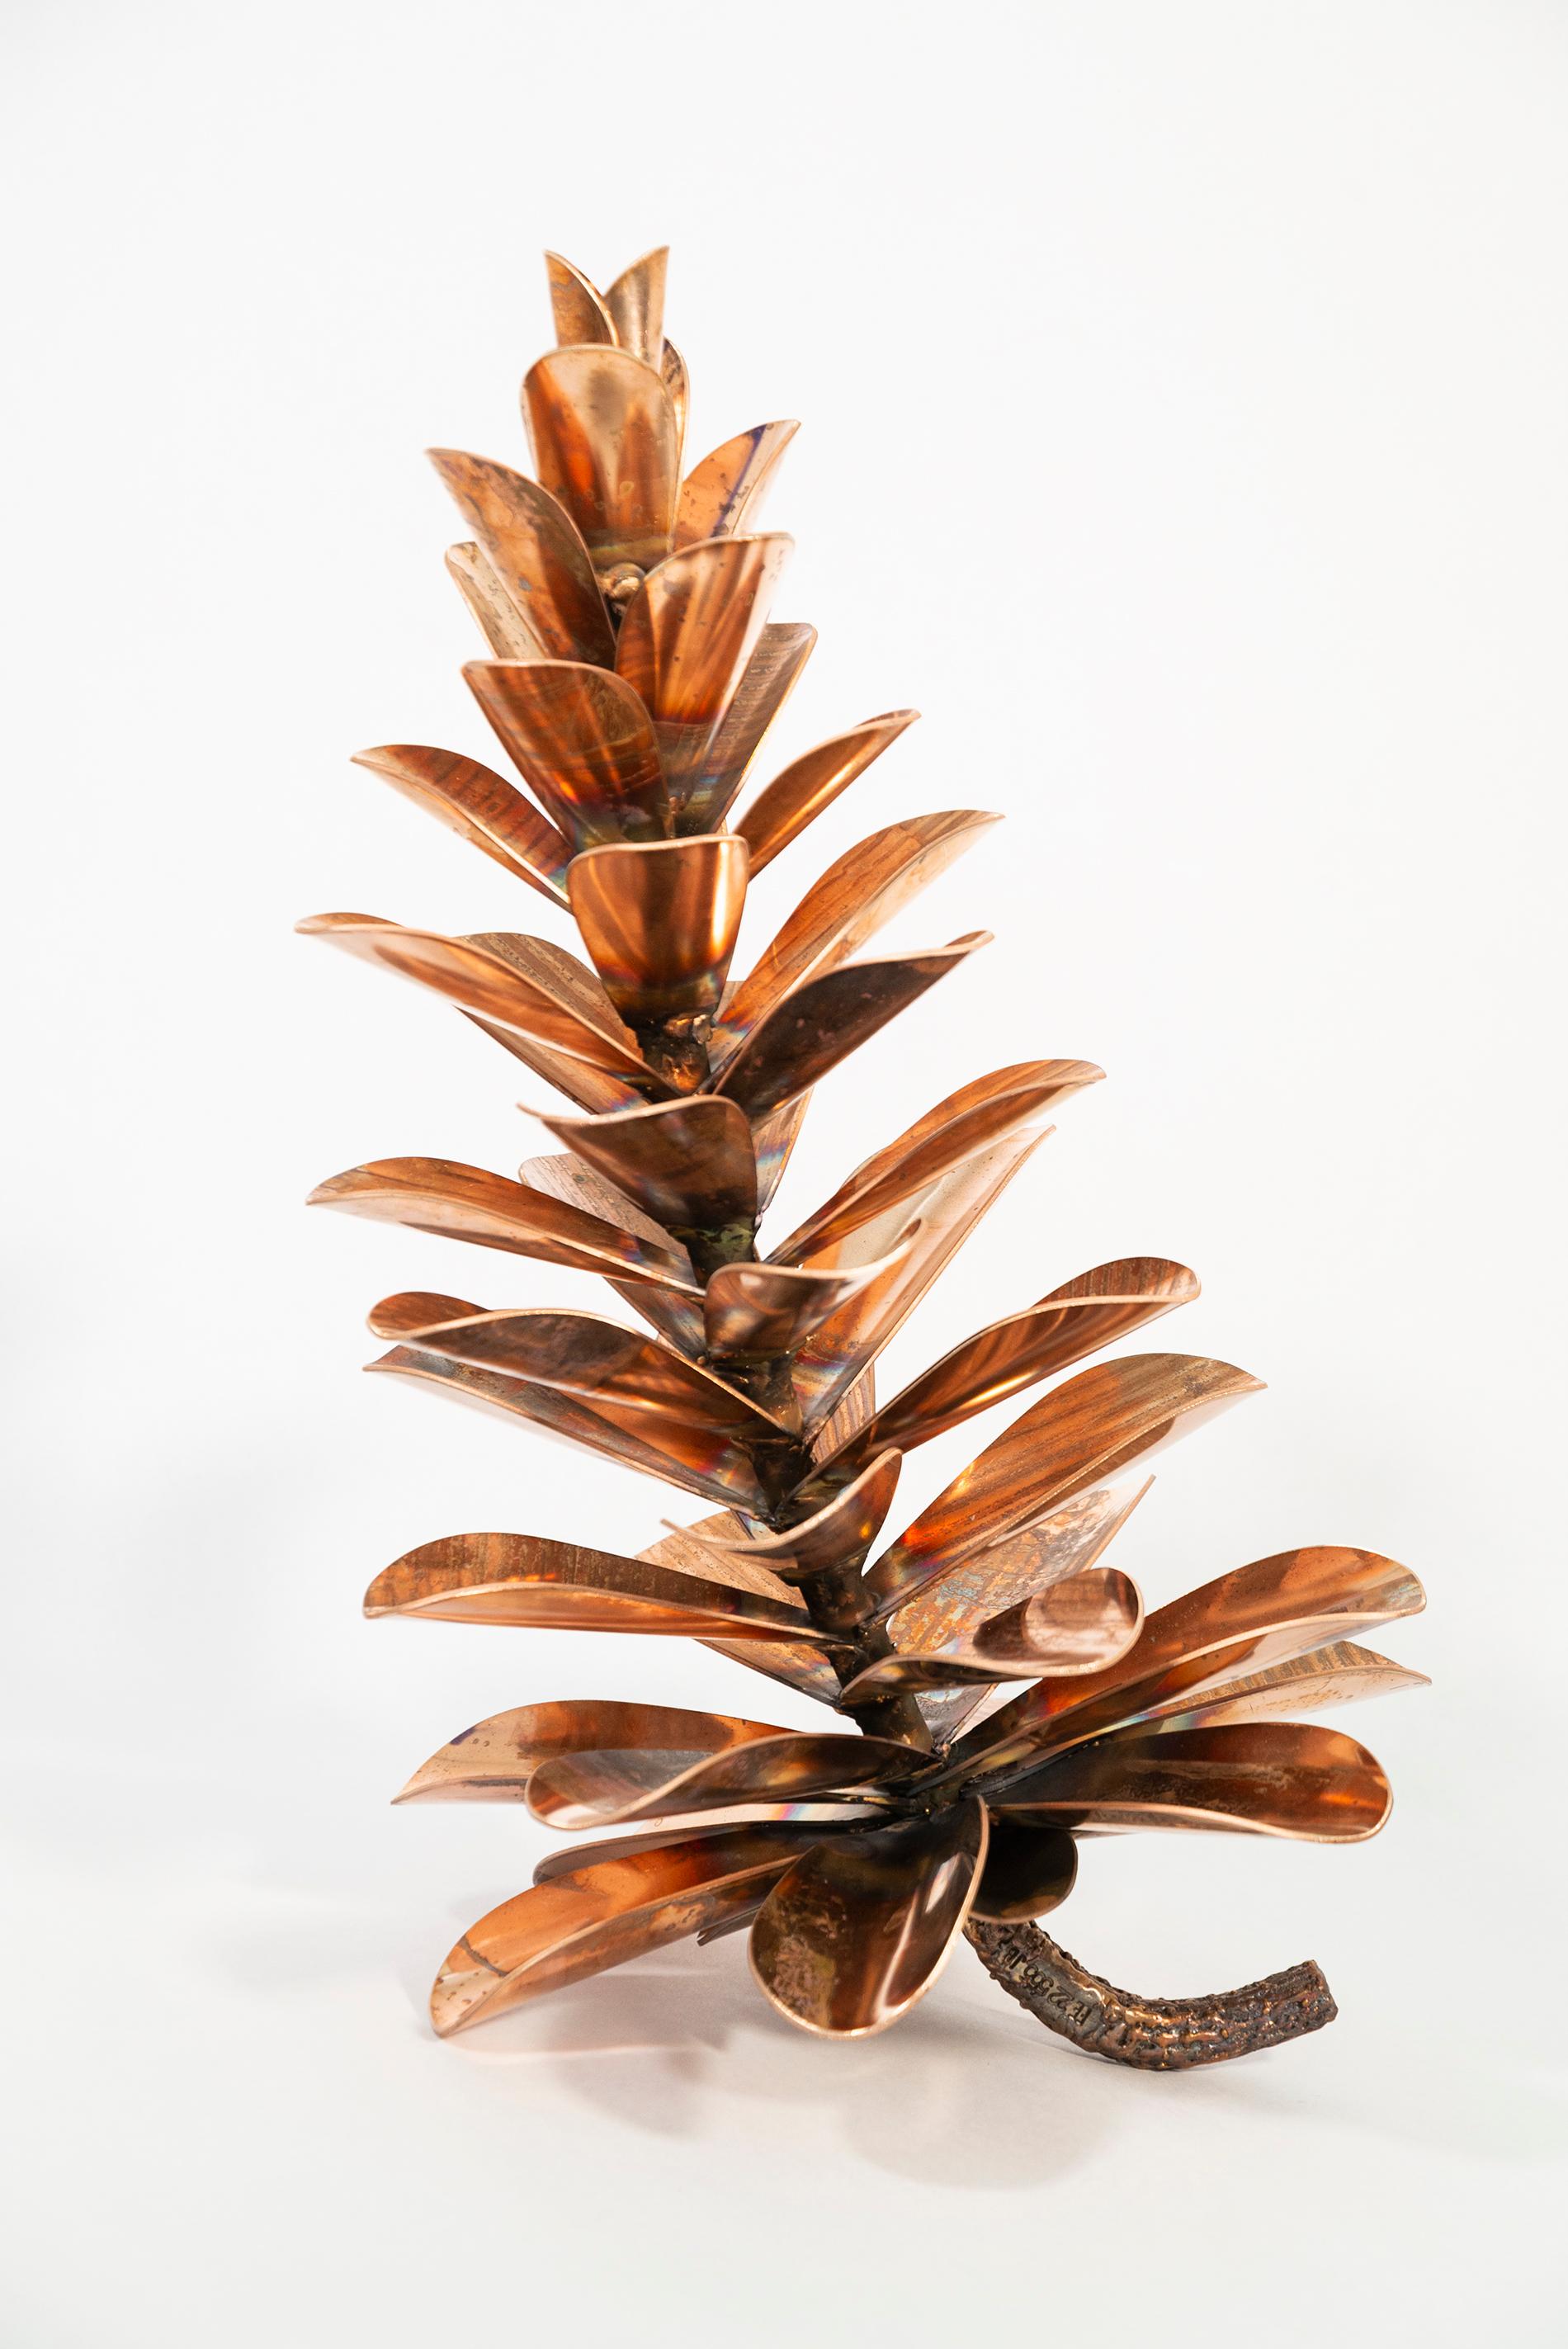 Bronze Pine Cone 22-555 - nature inspired, still life, forged bronze sculpture - Sculpture by Floyd Elzinga